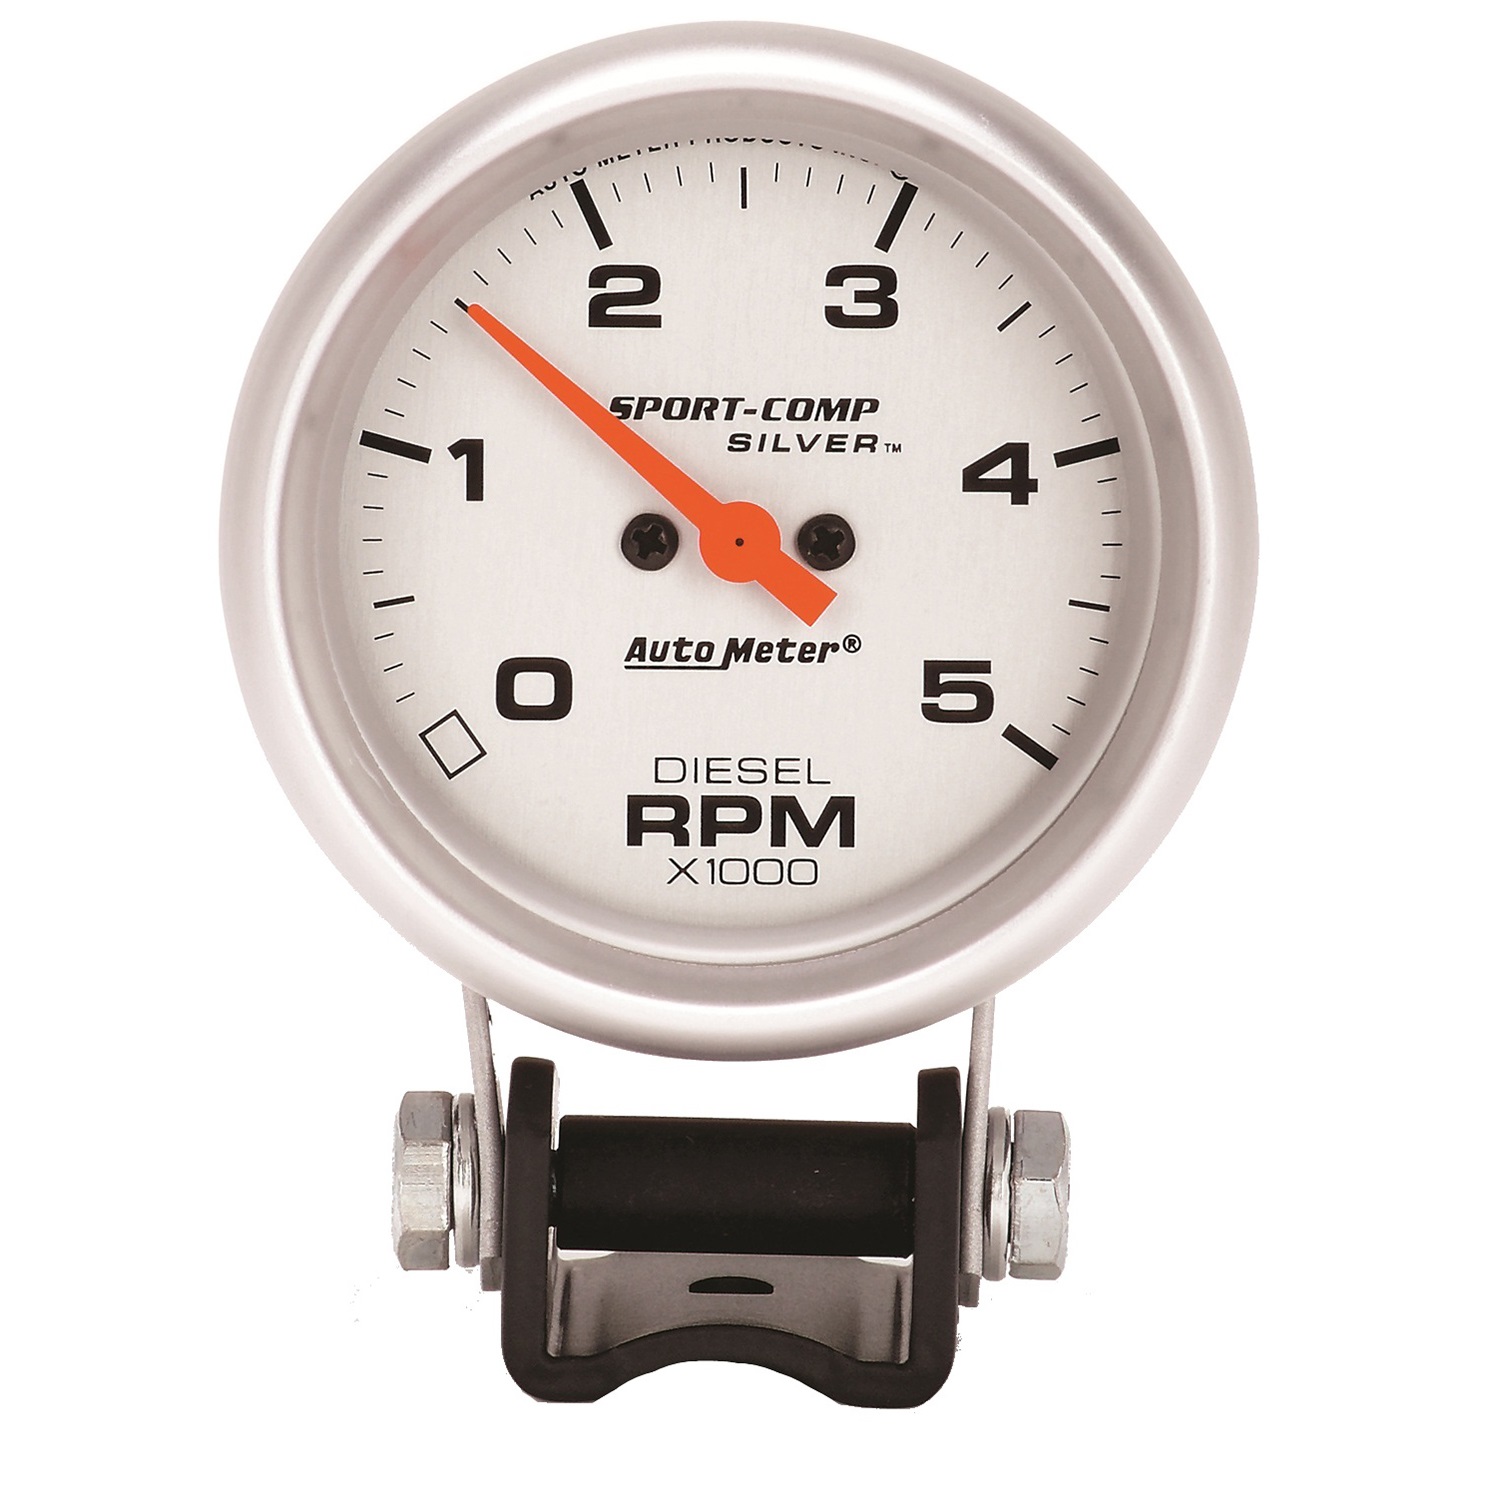 Auto Meter Auto Meter 3788 Sport-Comp Silver; Mini Tachometer